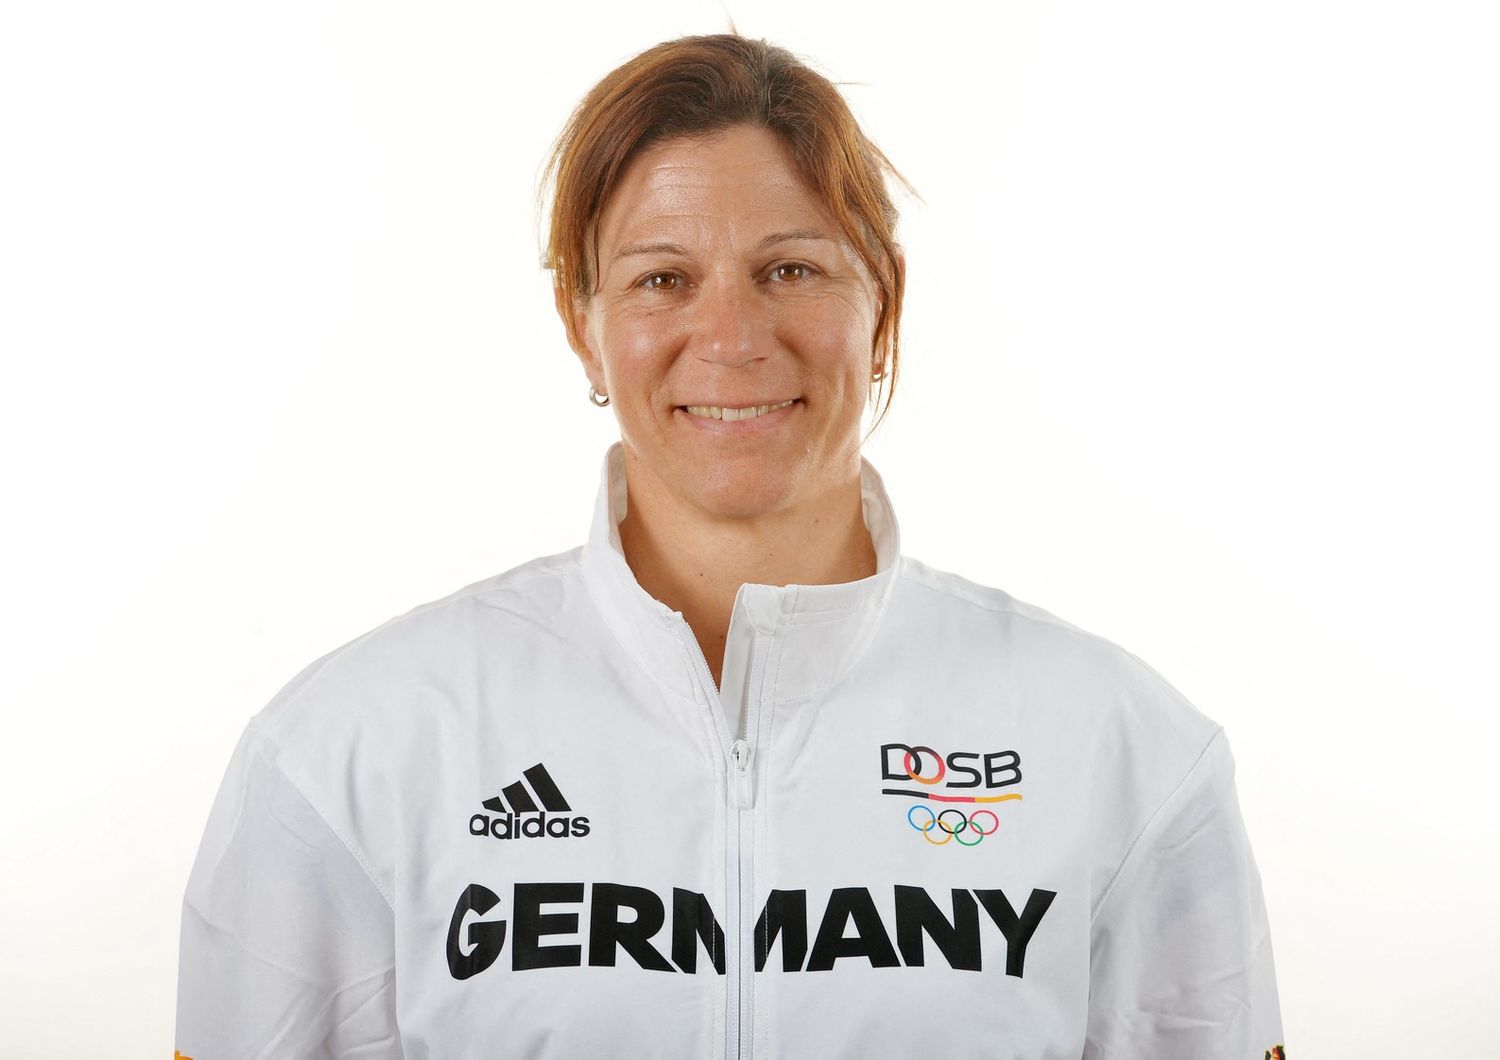 Kim Raisner, allenatrice pentathlon tedesca espulsa a Tokyo 2020